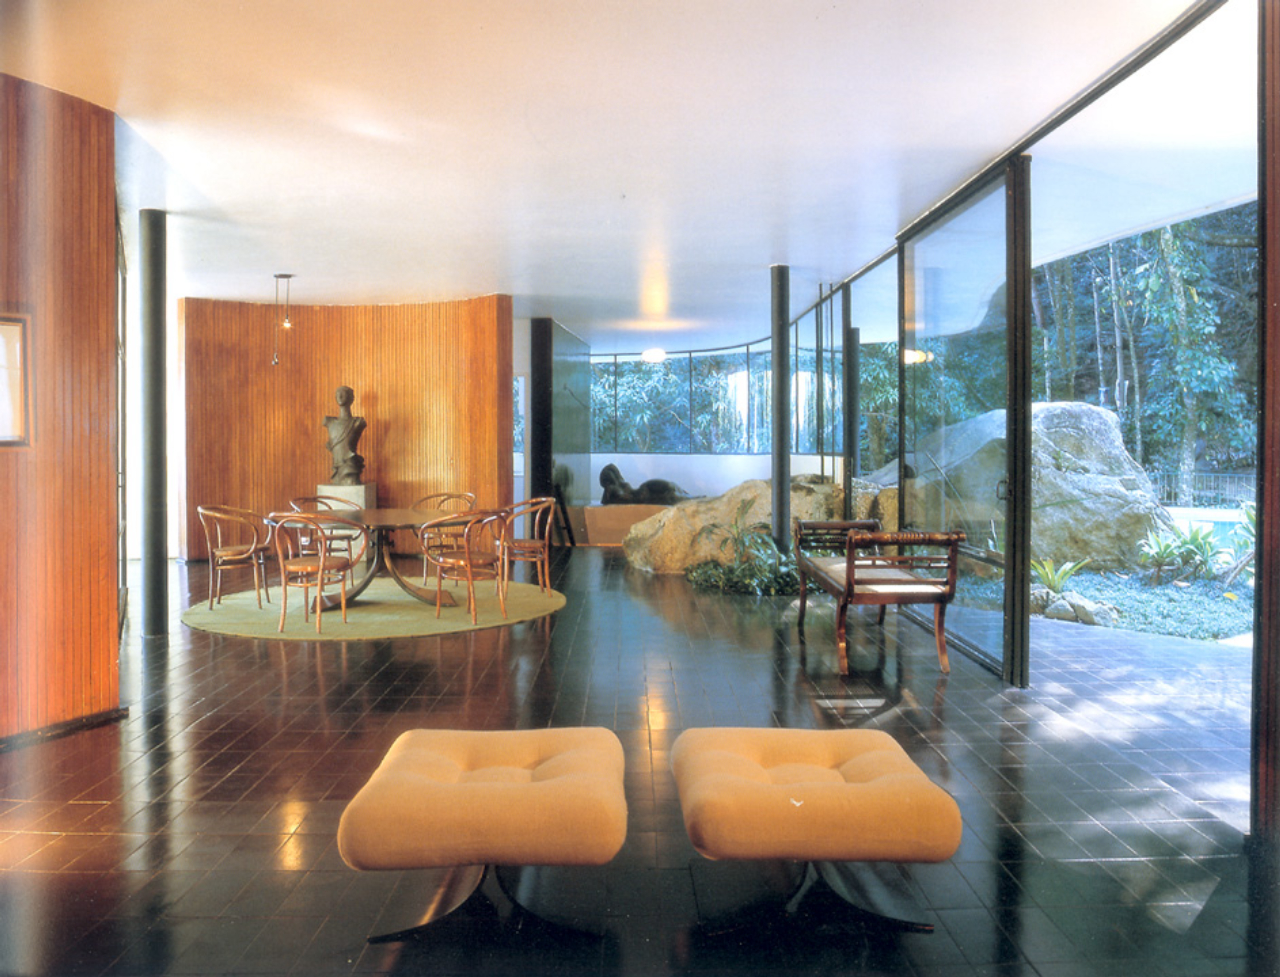 Sala projetada por Oscar Niemeyer. Foto: WikiArquitectura/ Divulgação